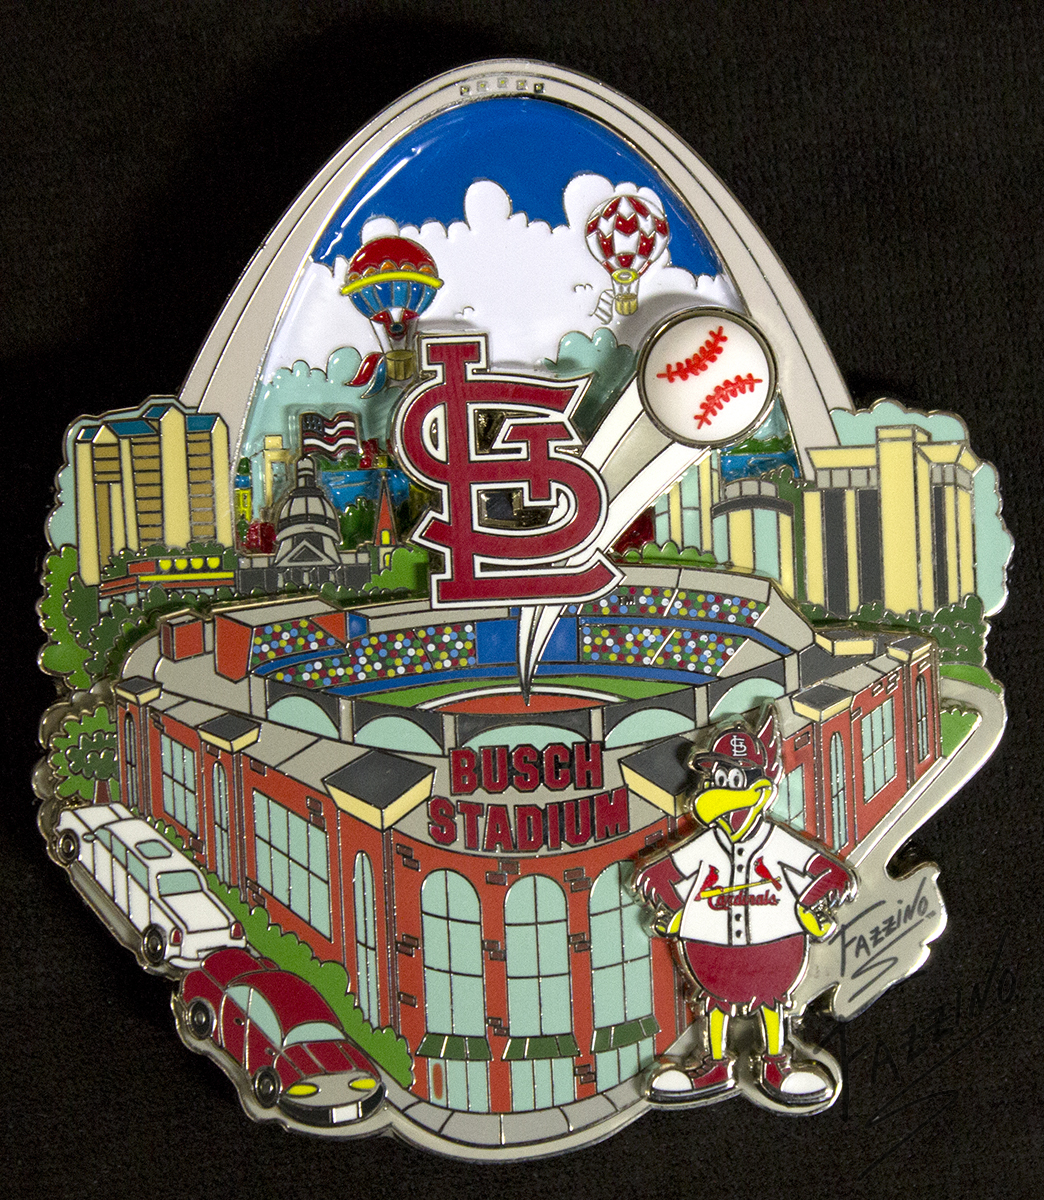 Four New MLB Stadium Collectors Pins Released! | Fazzino